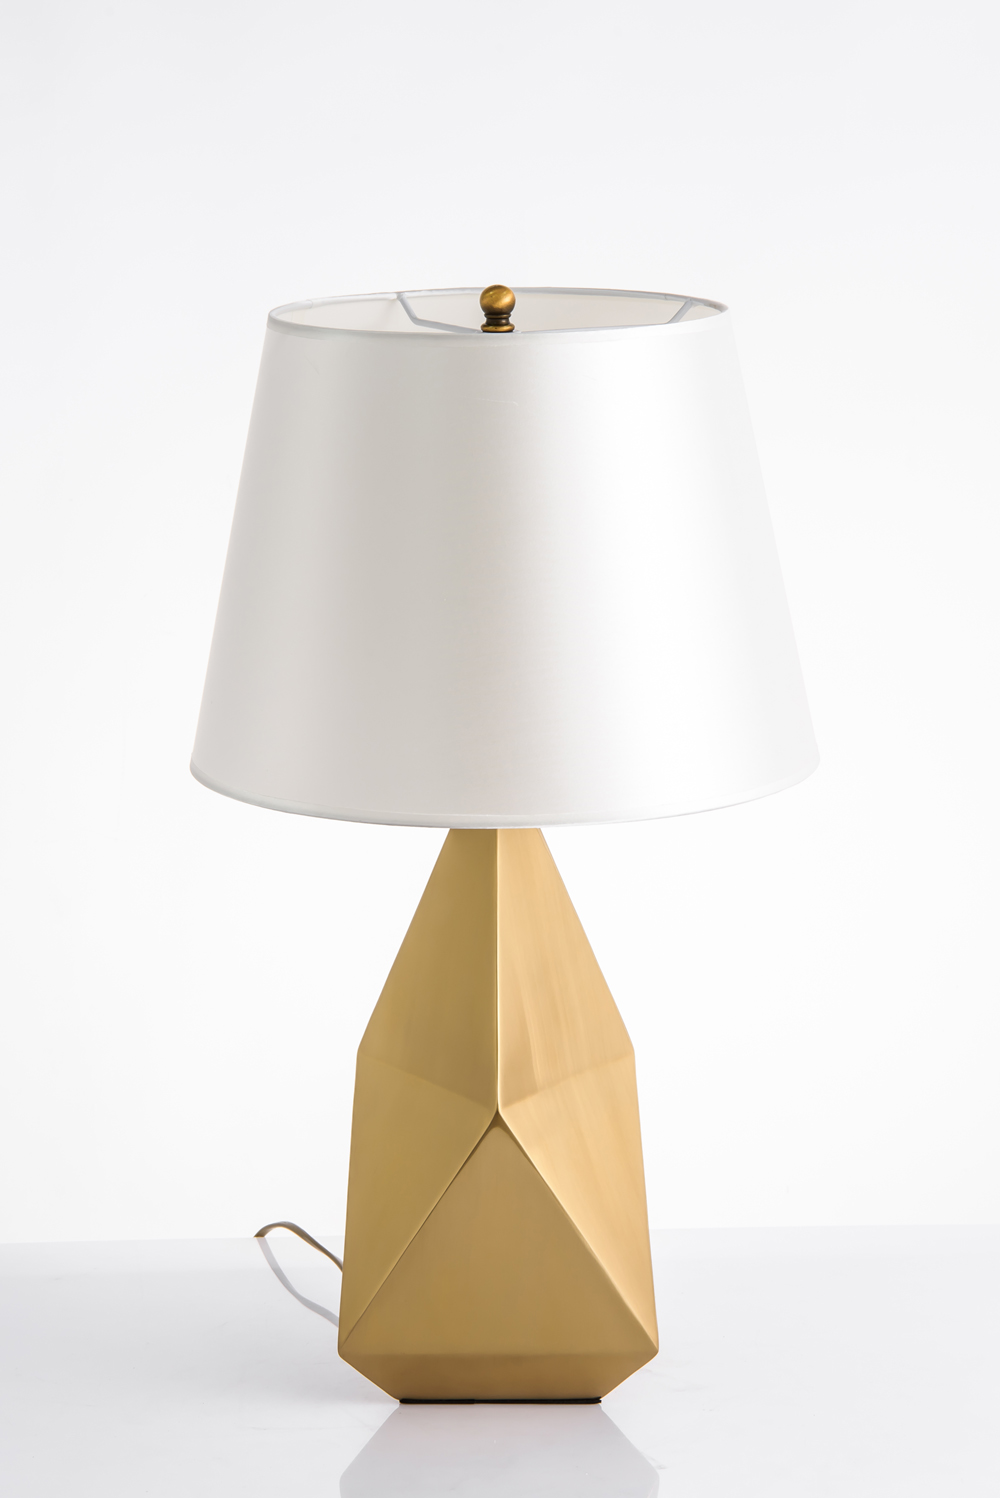 Custom table lamp